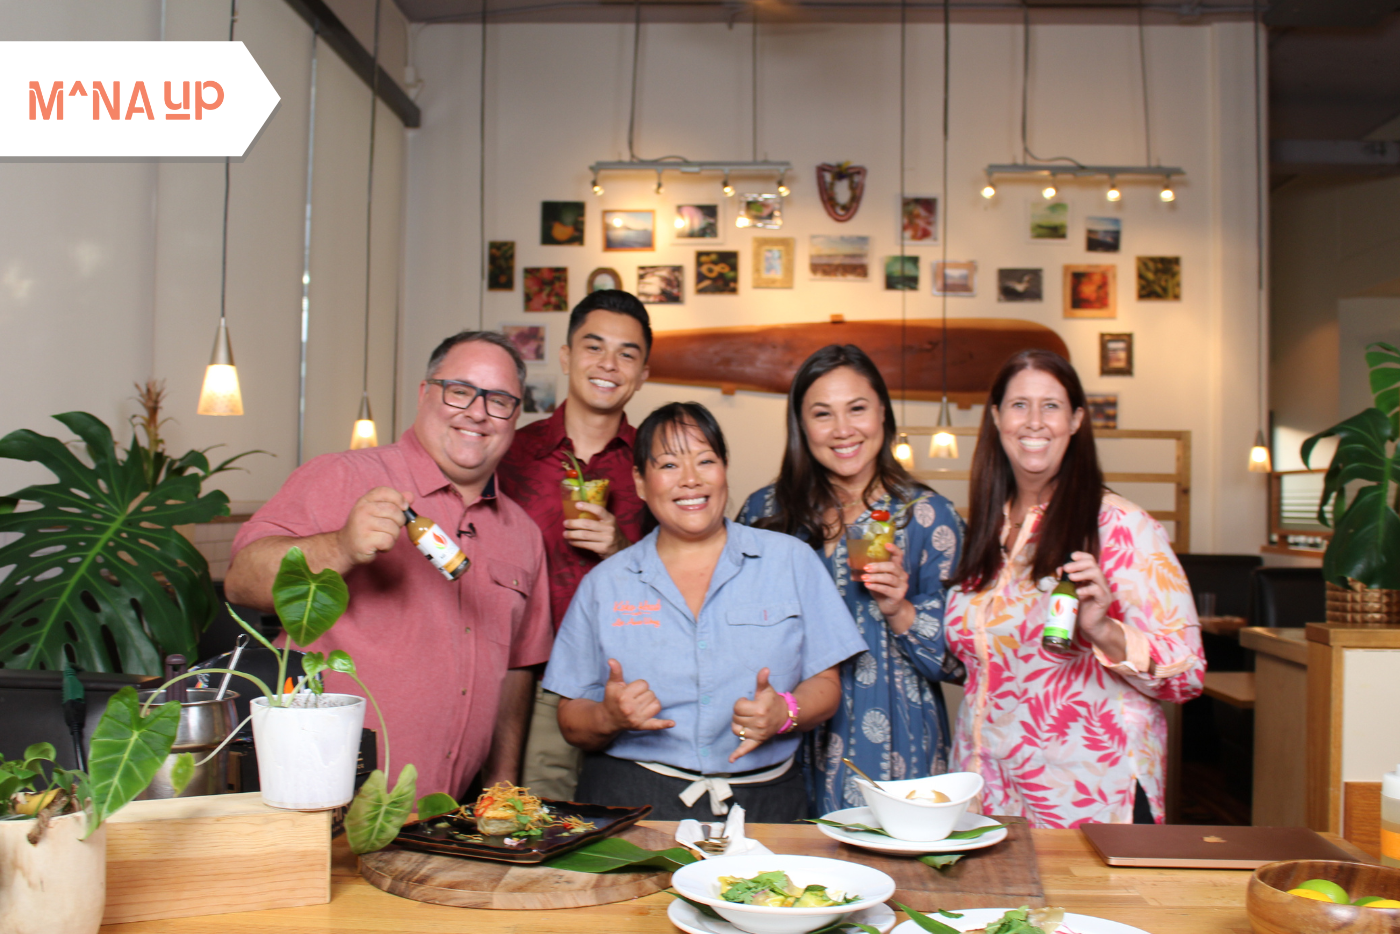 Hawaiian Airlines & Mana Up Present Meet the Makers Season 3!